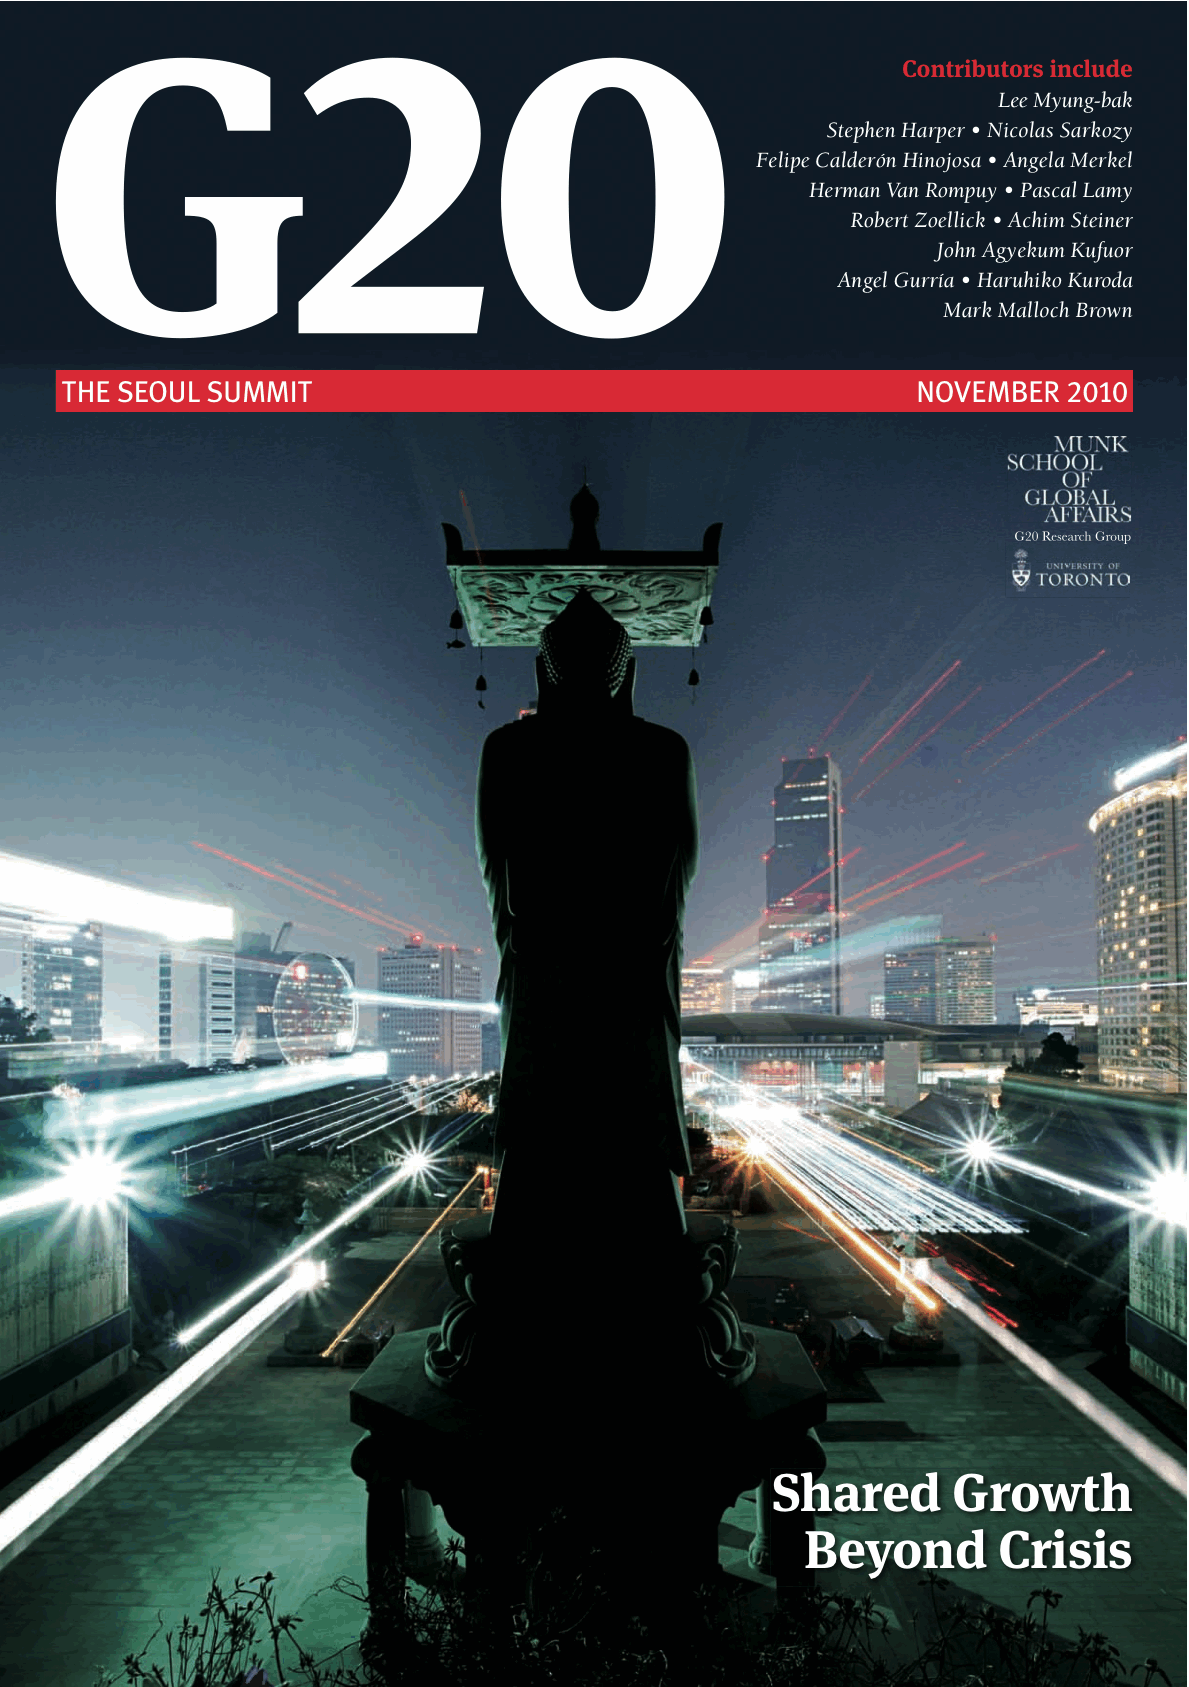 The G20 Seoul Summit 2010